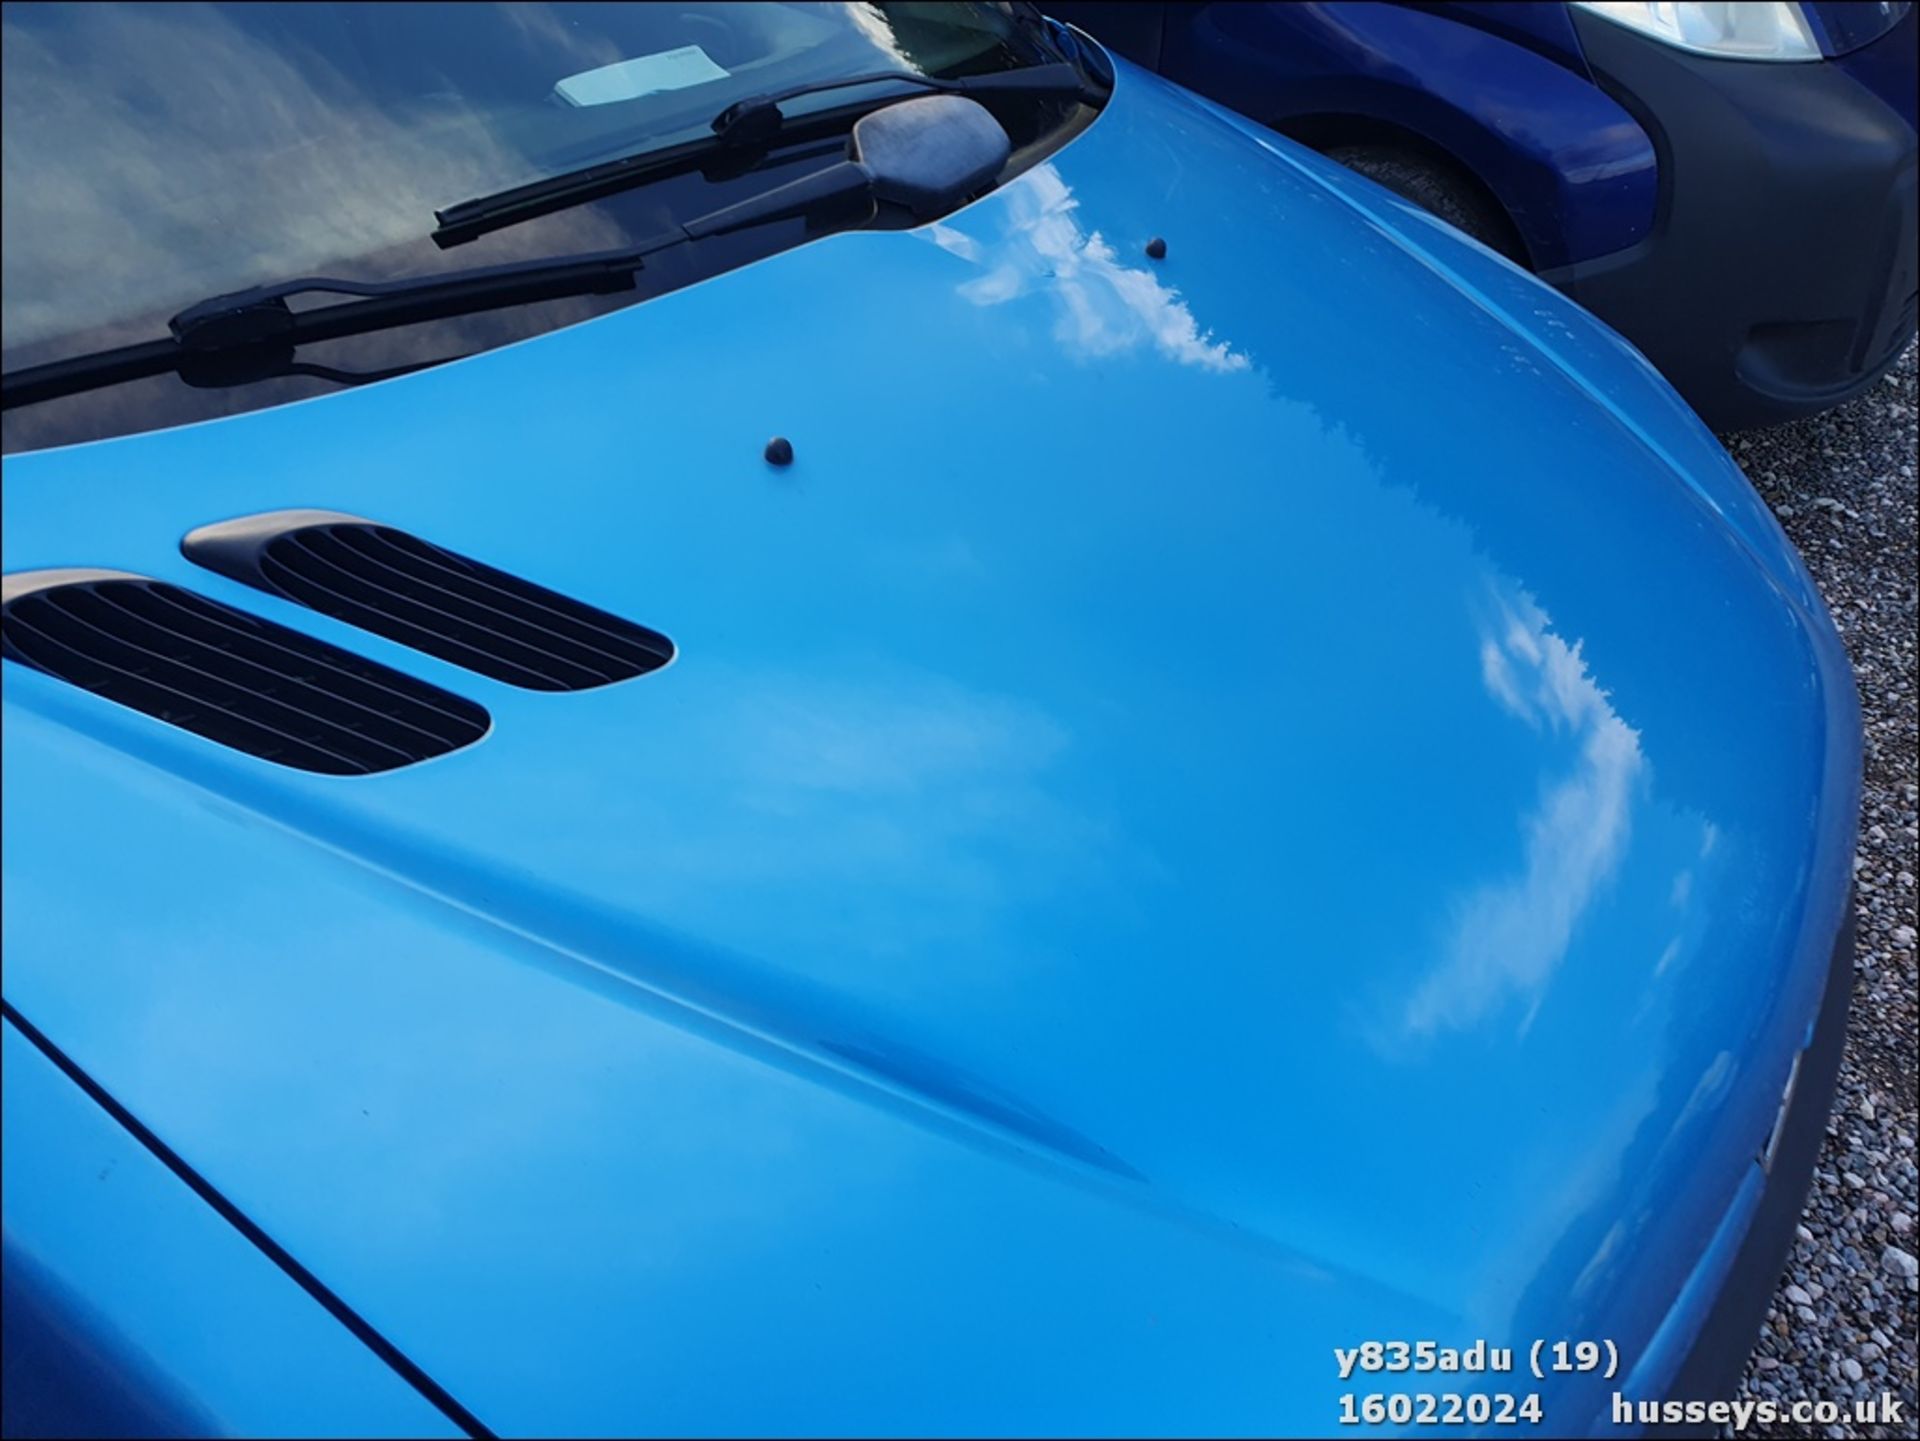 2001 PEUGEOT 206 LX AUTO - 1360cc 3dr Hatchback (Blue, 85k) - Image 20 of 22